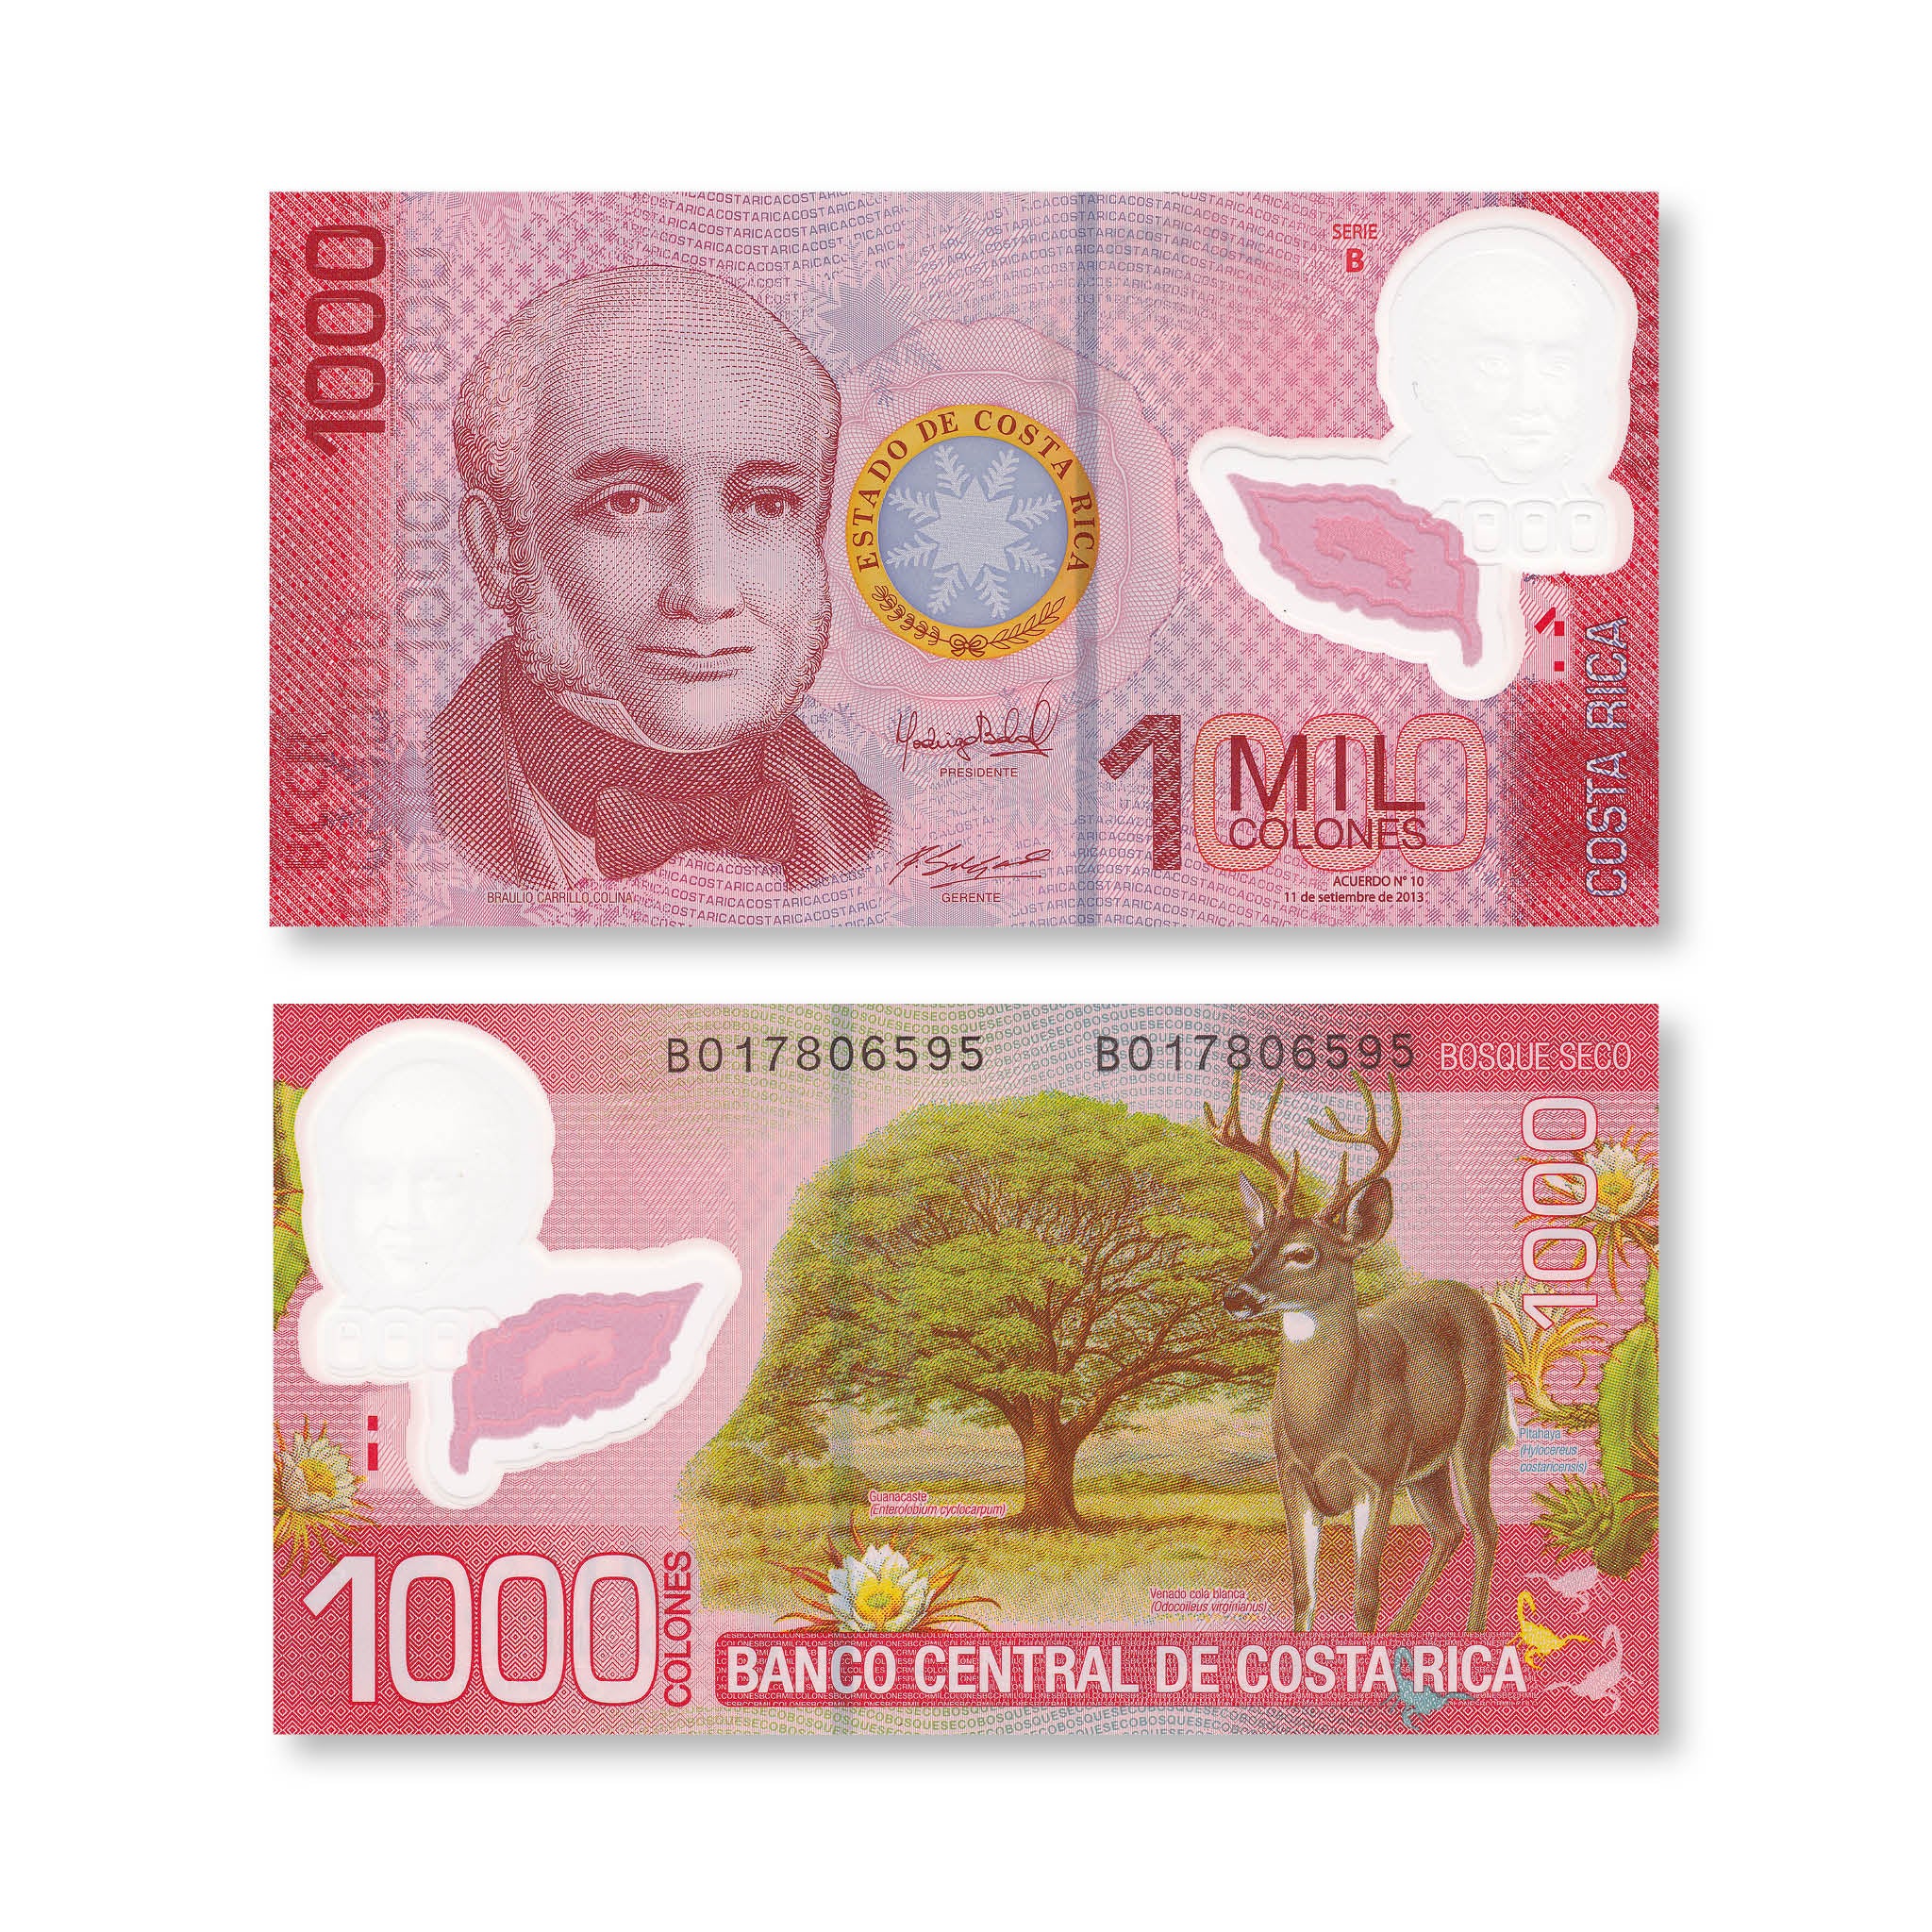 Costa Rica 1000 Colones, 2013, B558a, P274b, UNC - Robert's World Money - World Banknotes